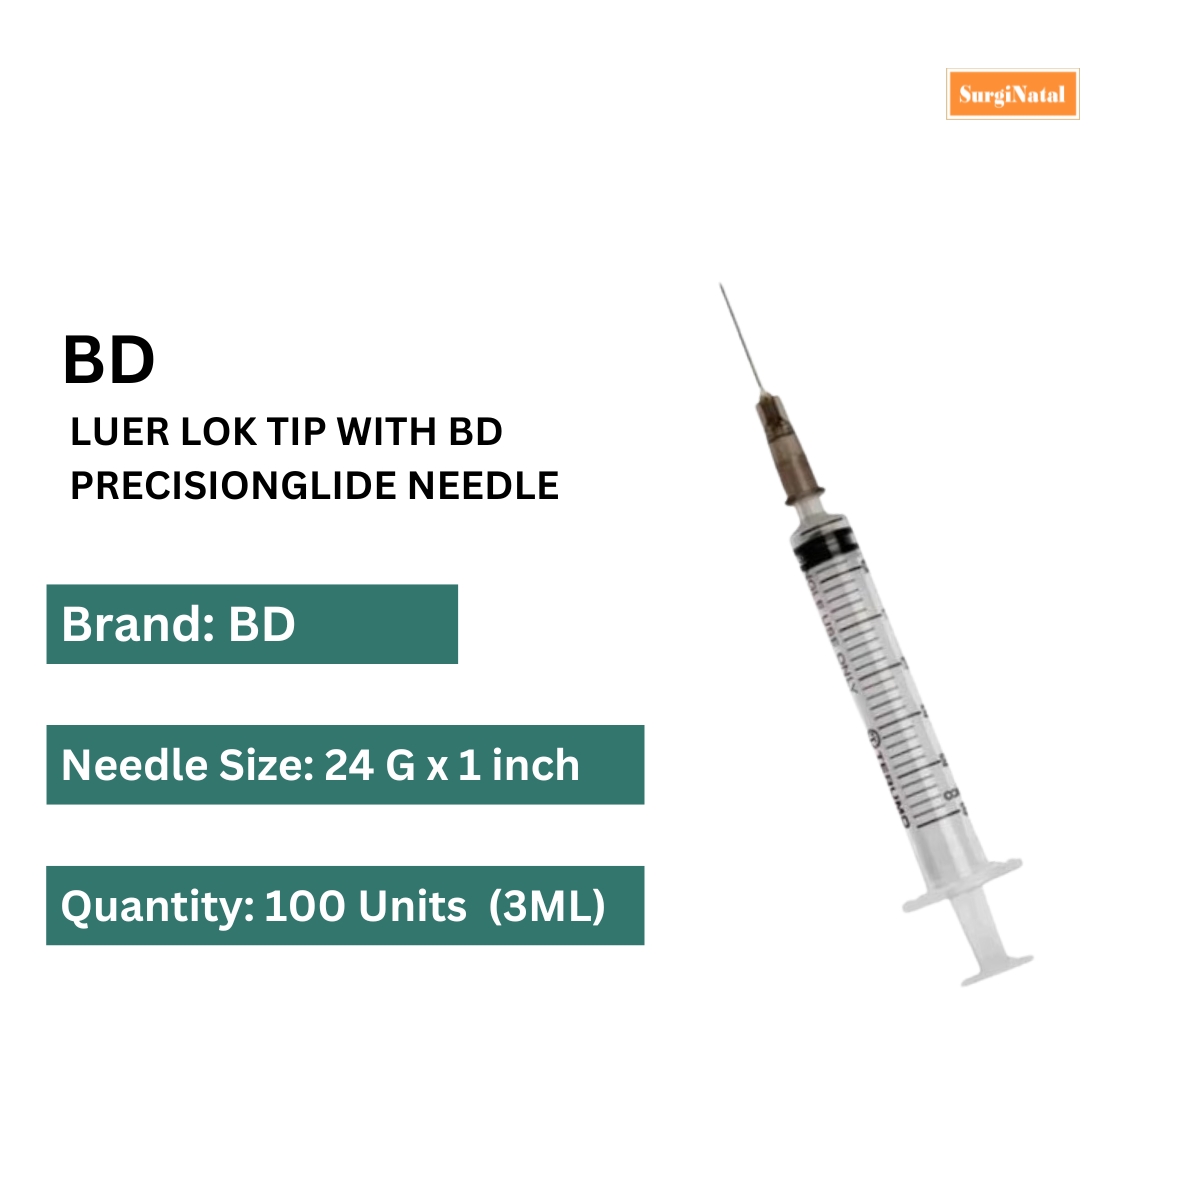 bd 3ml syringe luer lok tip with bd precisionglide needle -100 pcs box